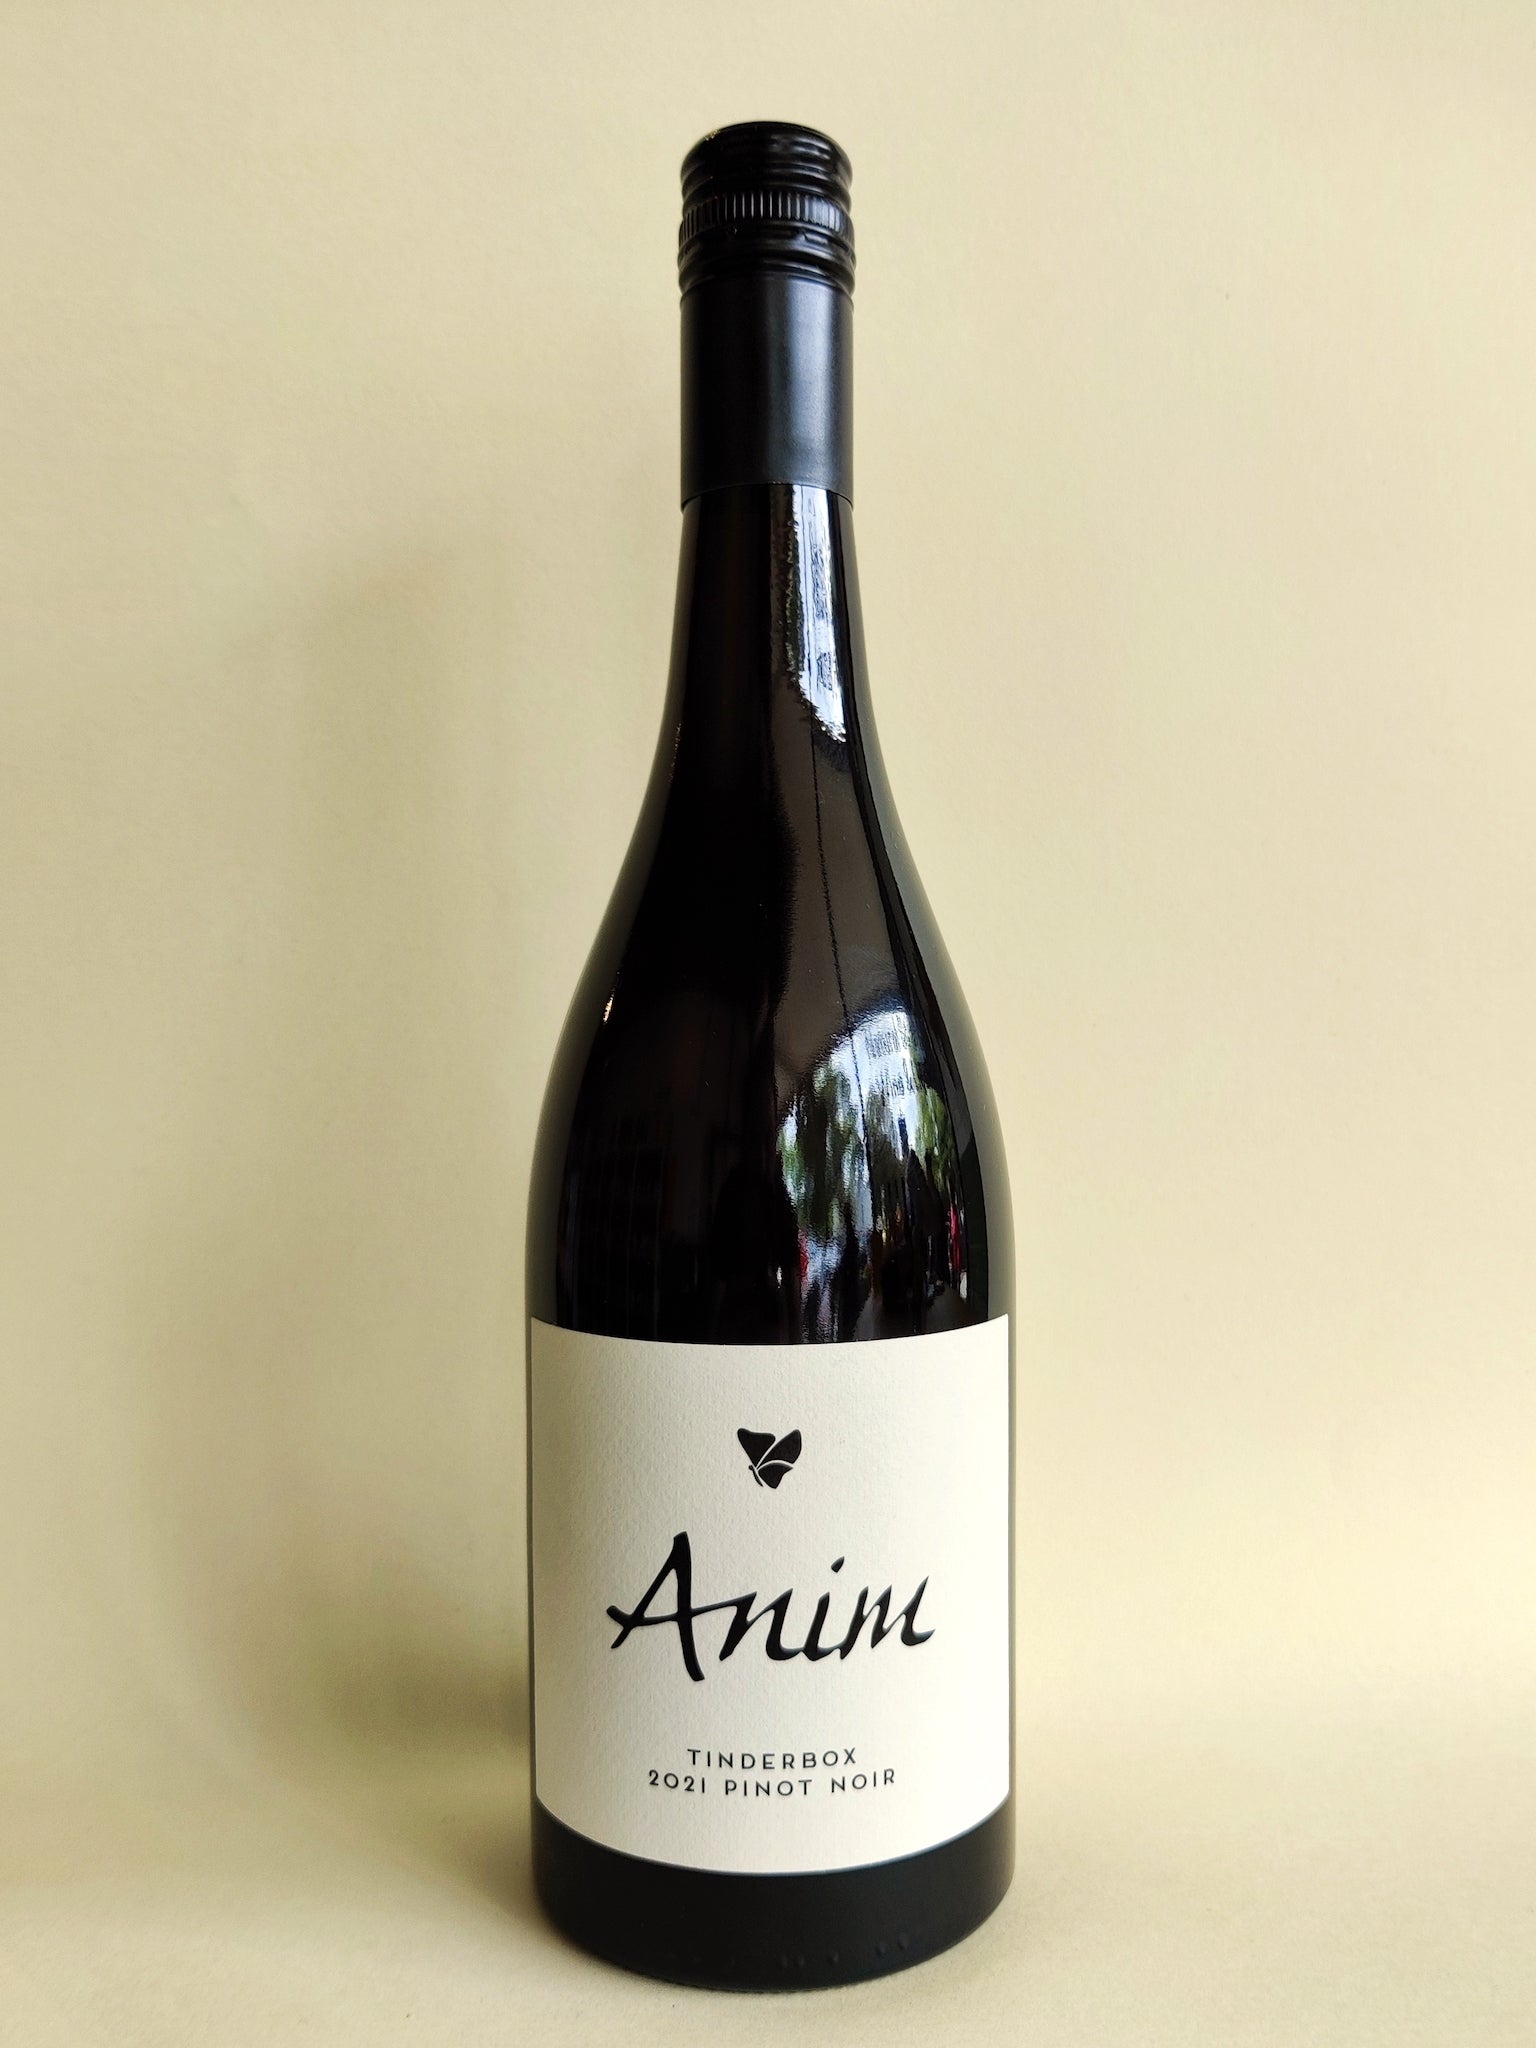 A bottle of Anim Tinderbox Pinot Noir from Tasmania.